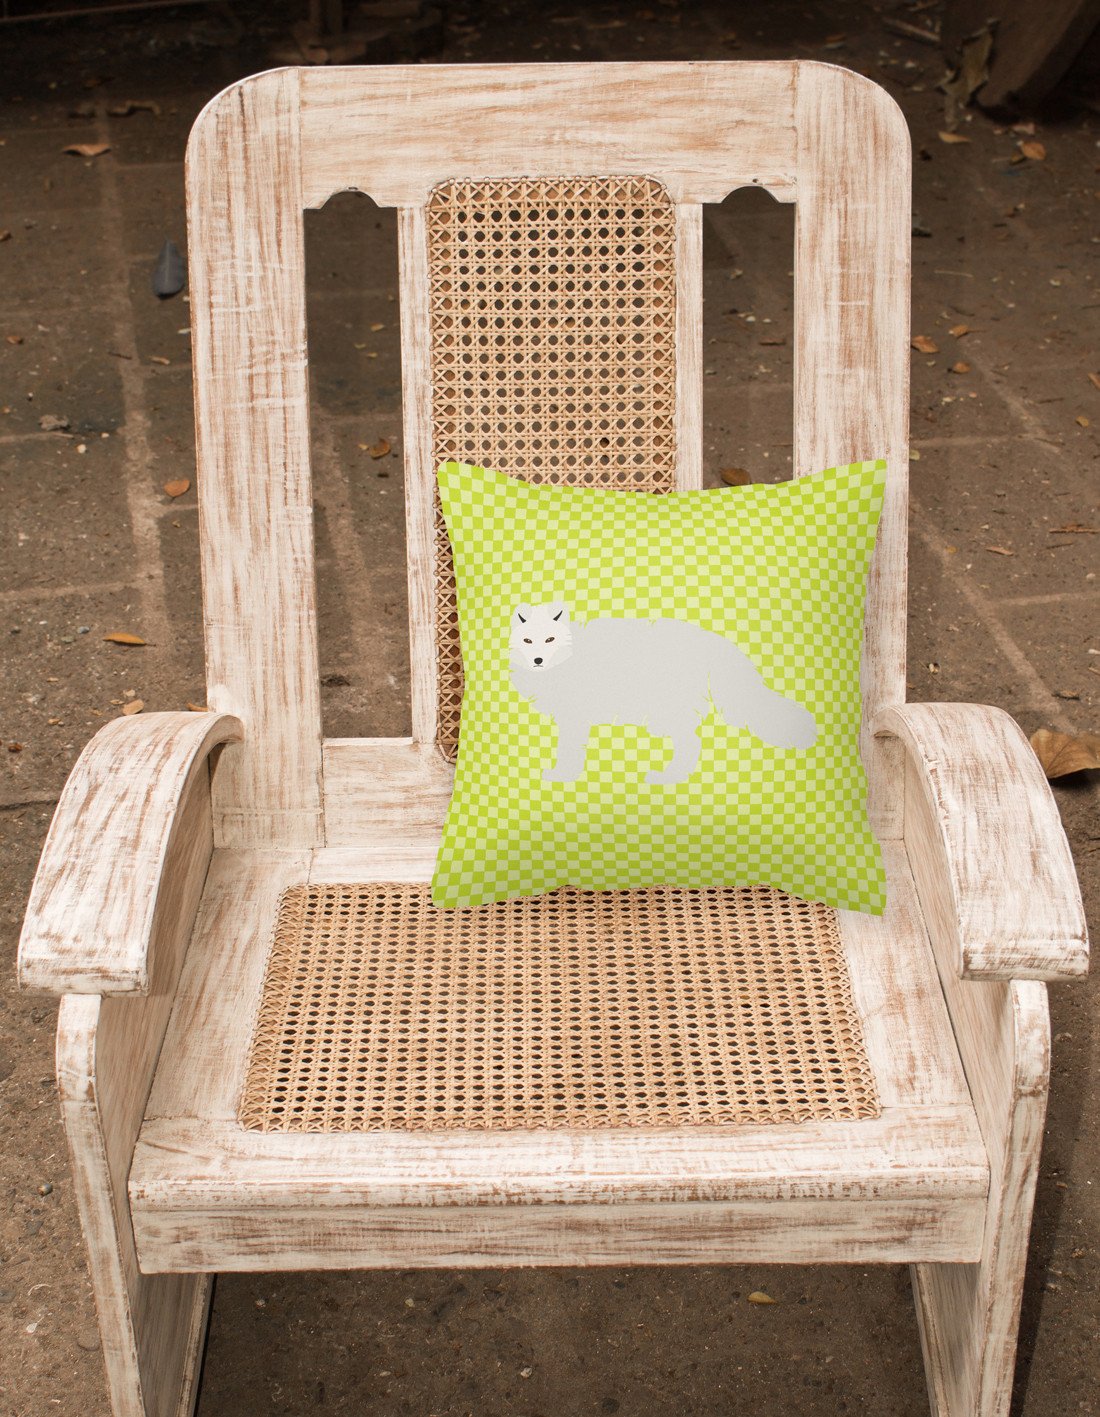 White Arctic Fox Green Fabric Decorative Pillow BB7703PW1818 by Caroline's Treasures